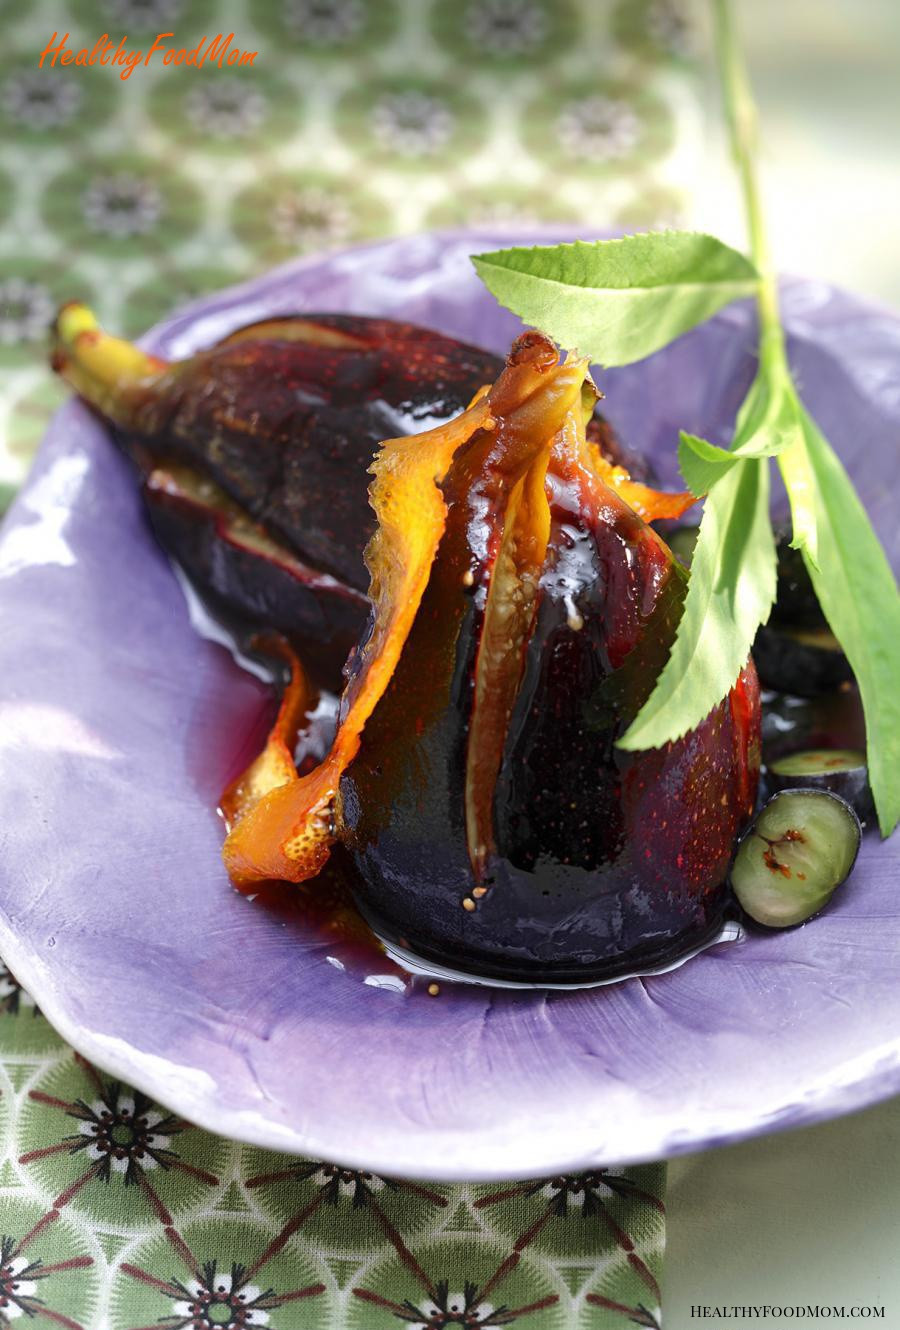 Mexican Tarragon Recipes
 Black figs confit with Mexican tarragon Healthy Food Mom